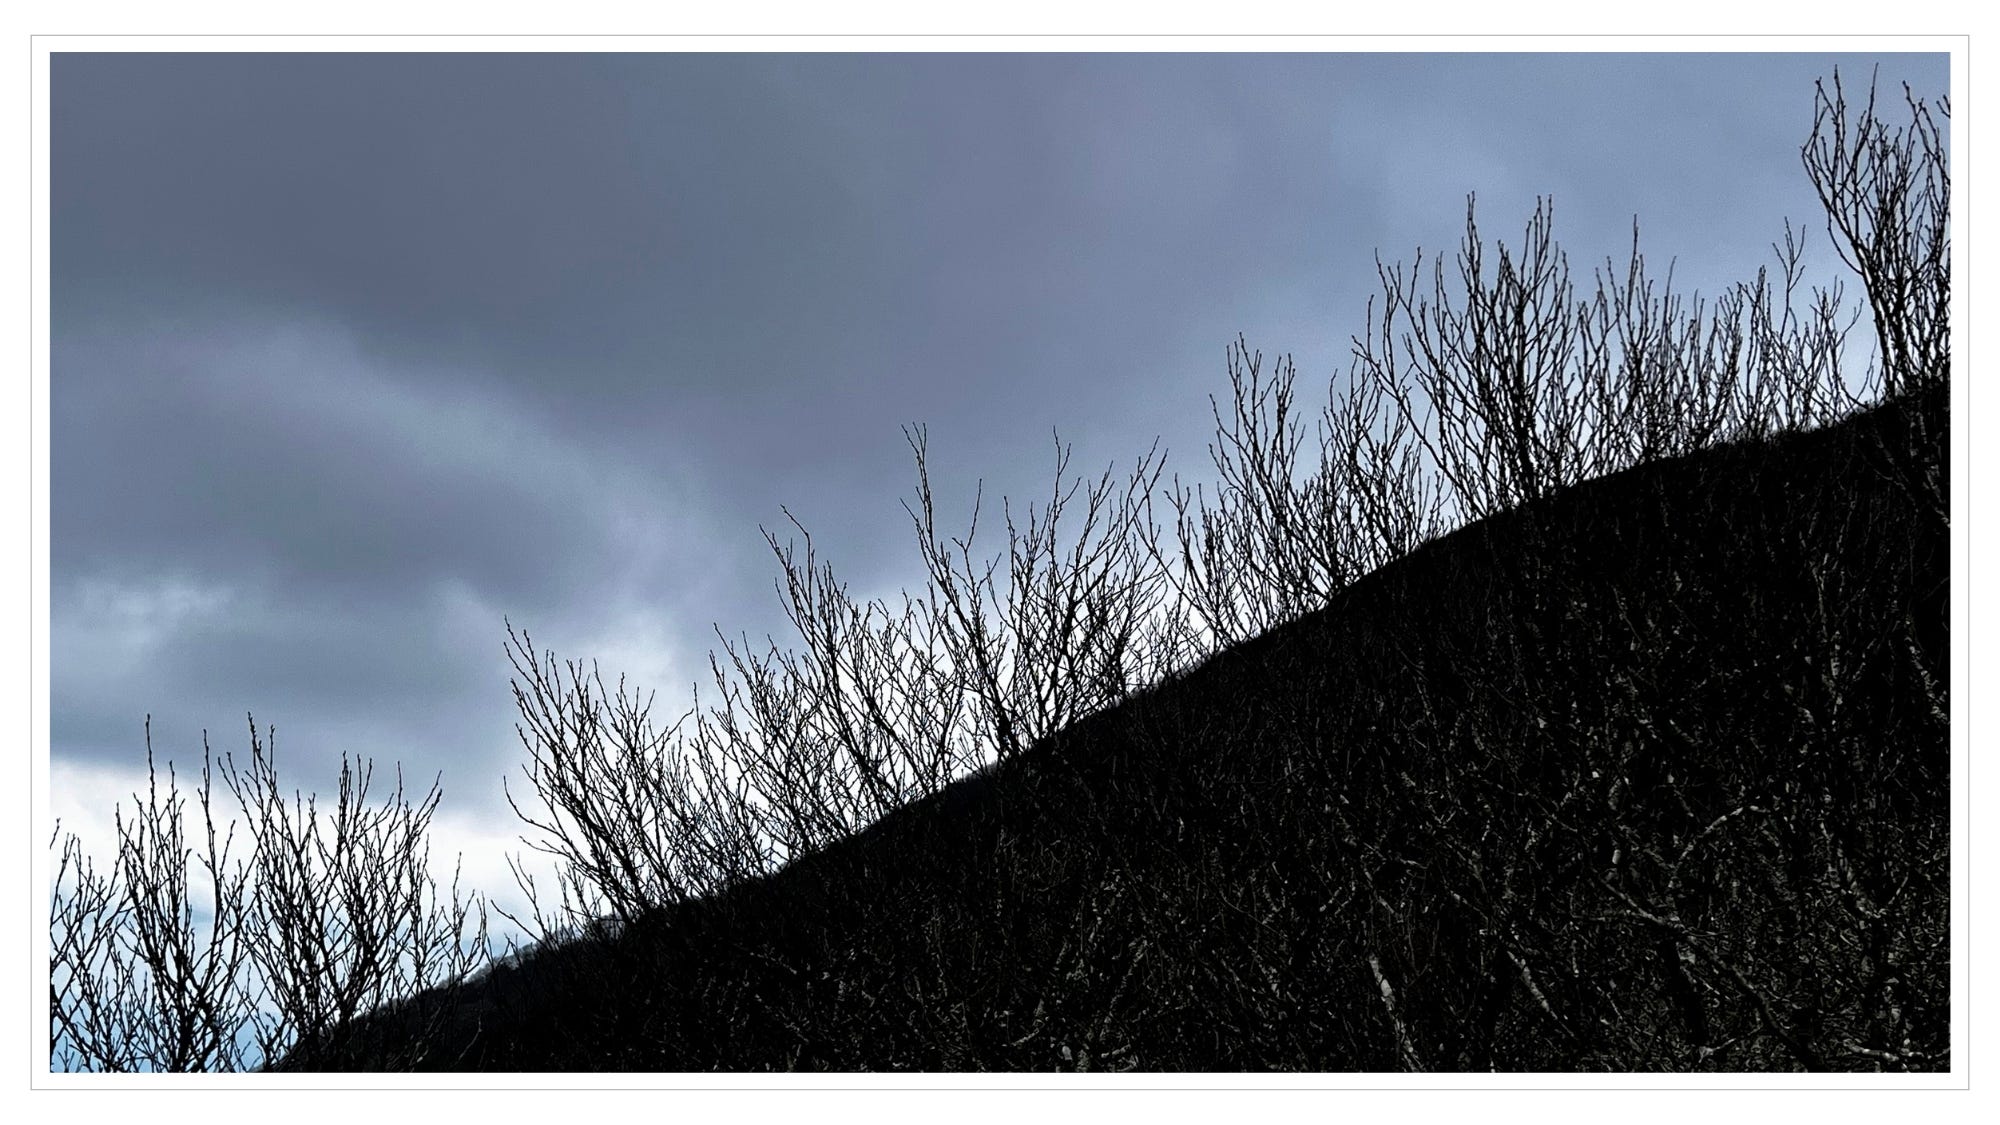 high elevation moutain ridge not yet budding, limbs of low growing bush reaching toward dark grey sky